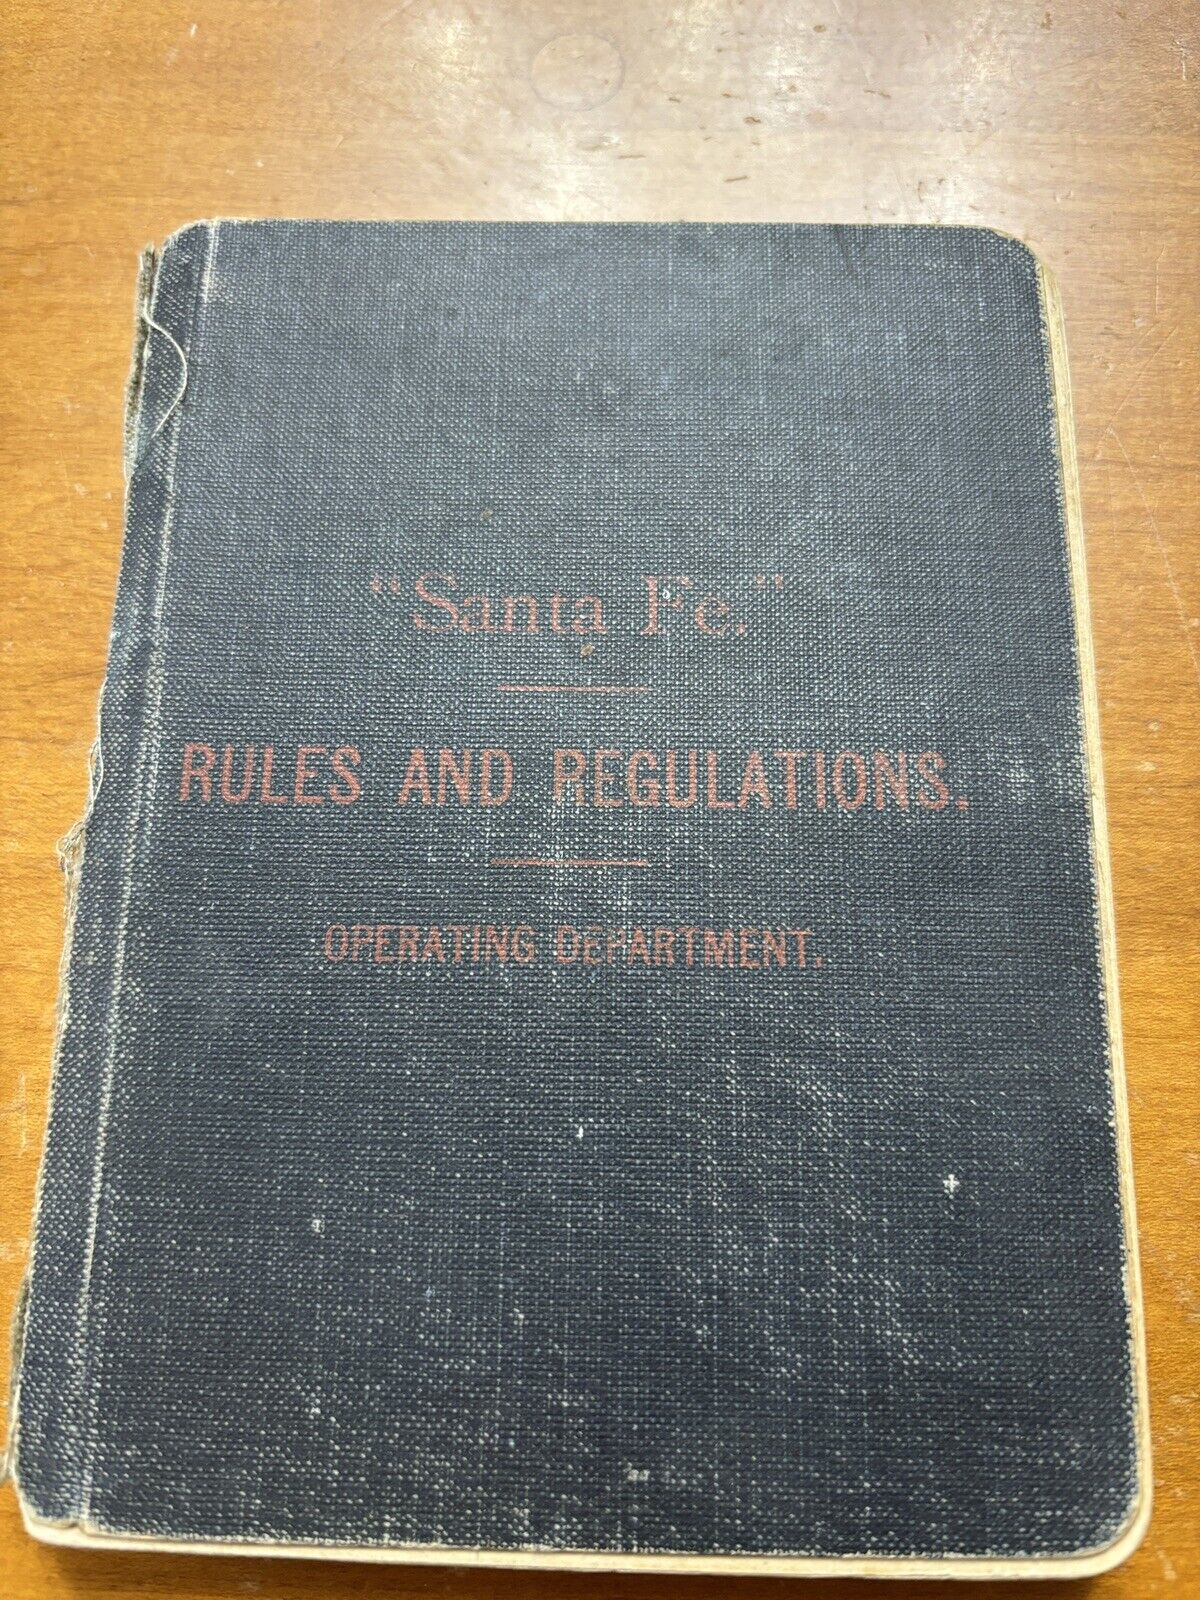 1909 Atchison Topeka Santa Fe Railway Railroad Rules Regulation Manual Book Rare